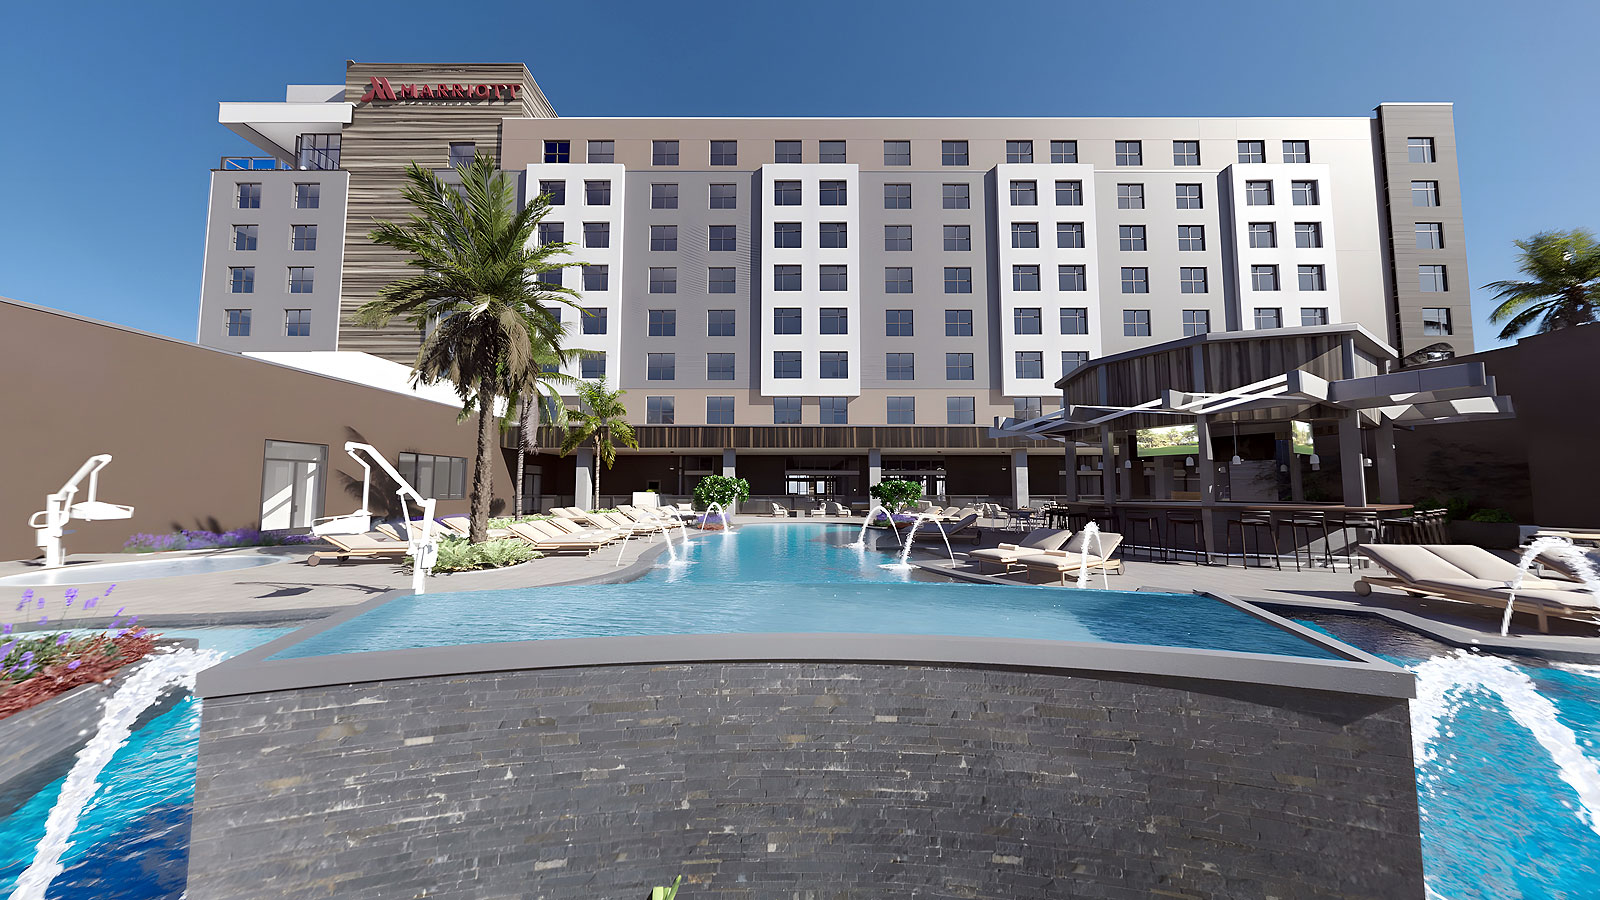 Palmetto Marriott Resort & Spa, Pool Deck